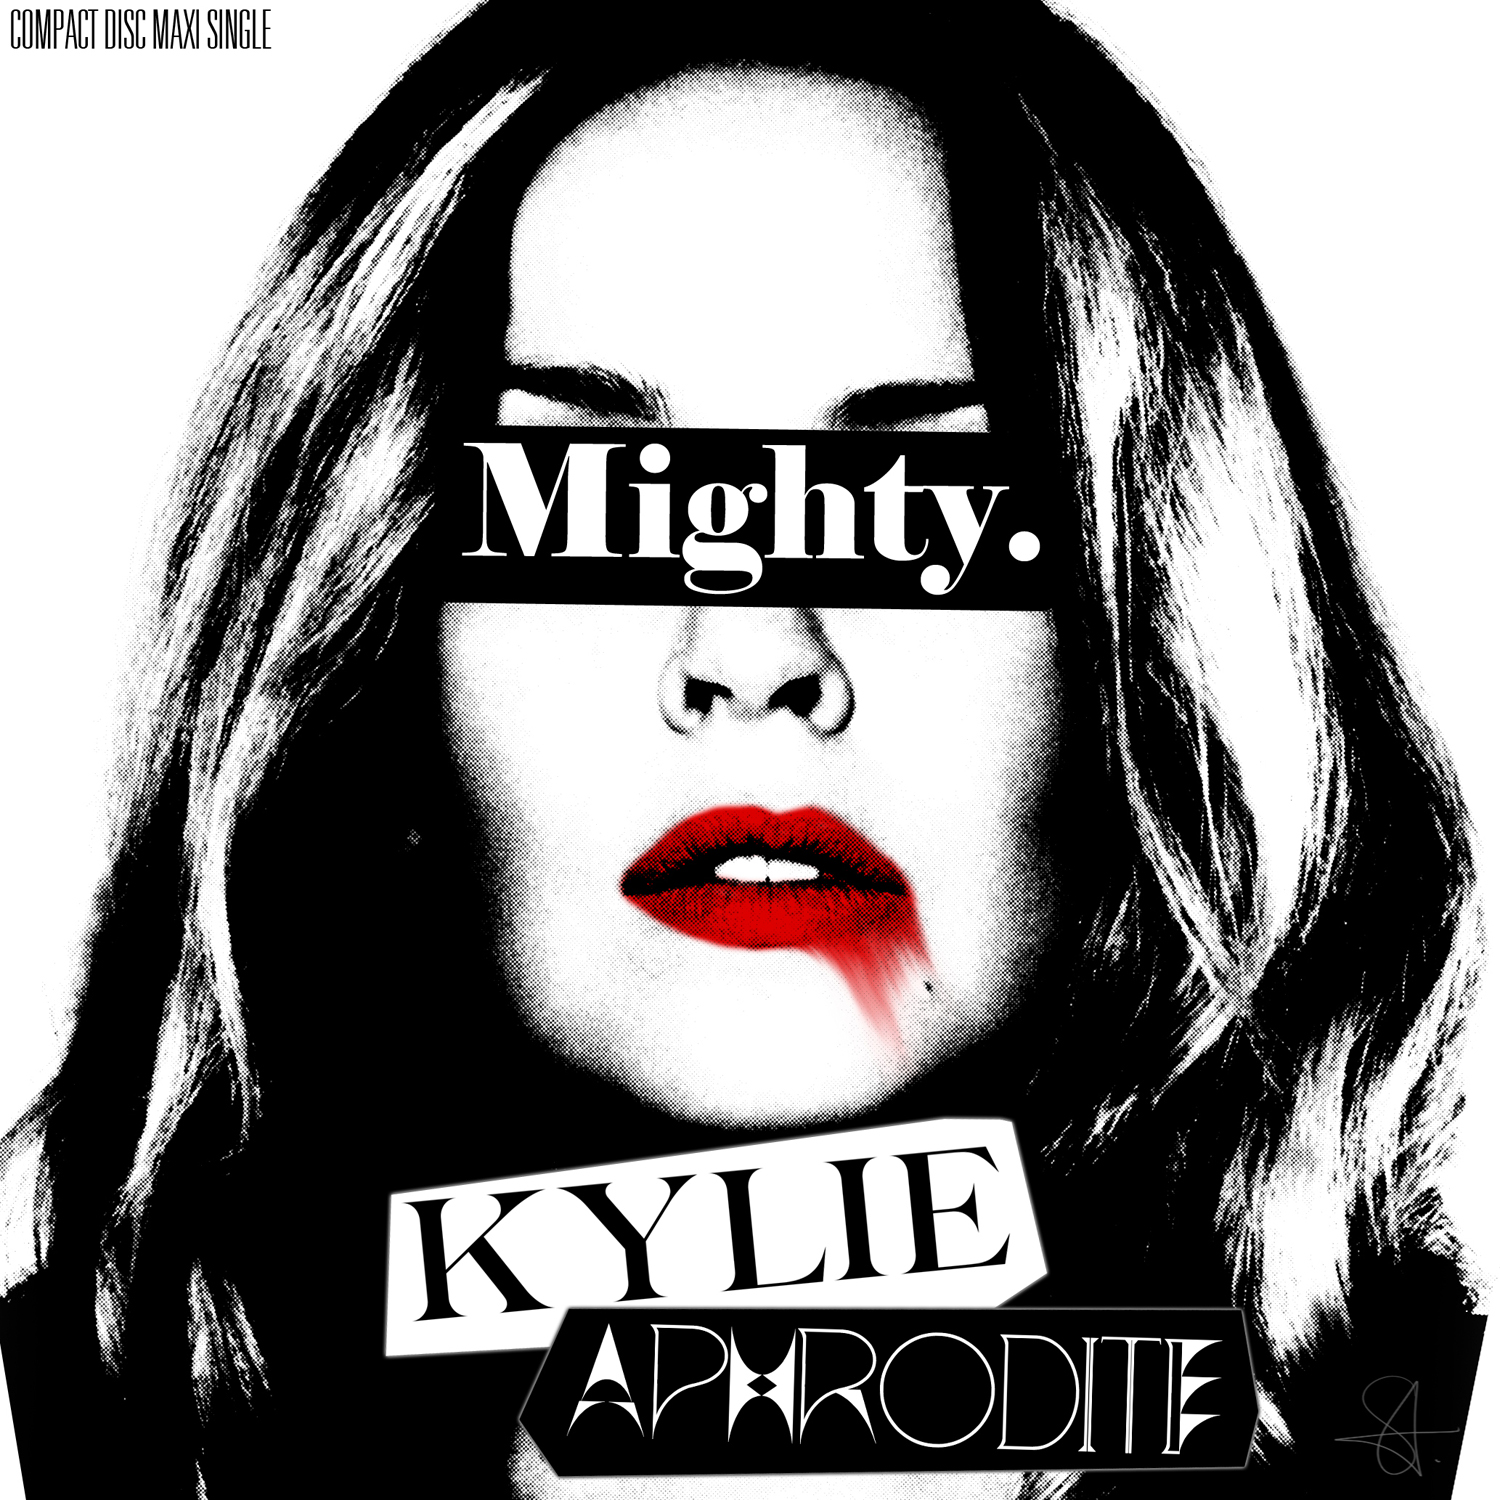 http://1.bp.blogspot.com/-nU_mgDGGRWU/TbQThkZcHgI/AAAAAAAAAAY/ocVe0xEtnRI/s1600/Kylie-Minogue-Aphrodite-FanMade-Supremangel.jpg